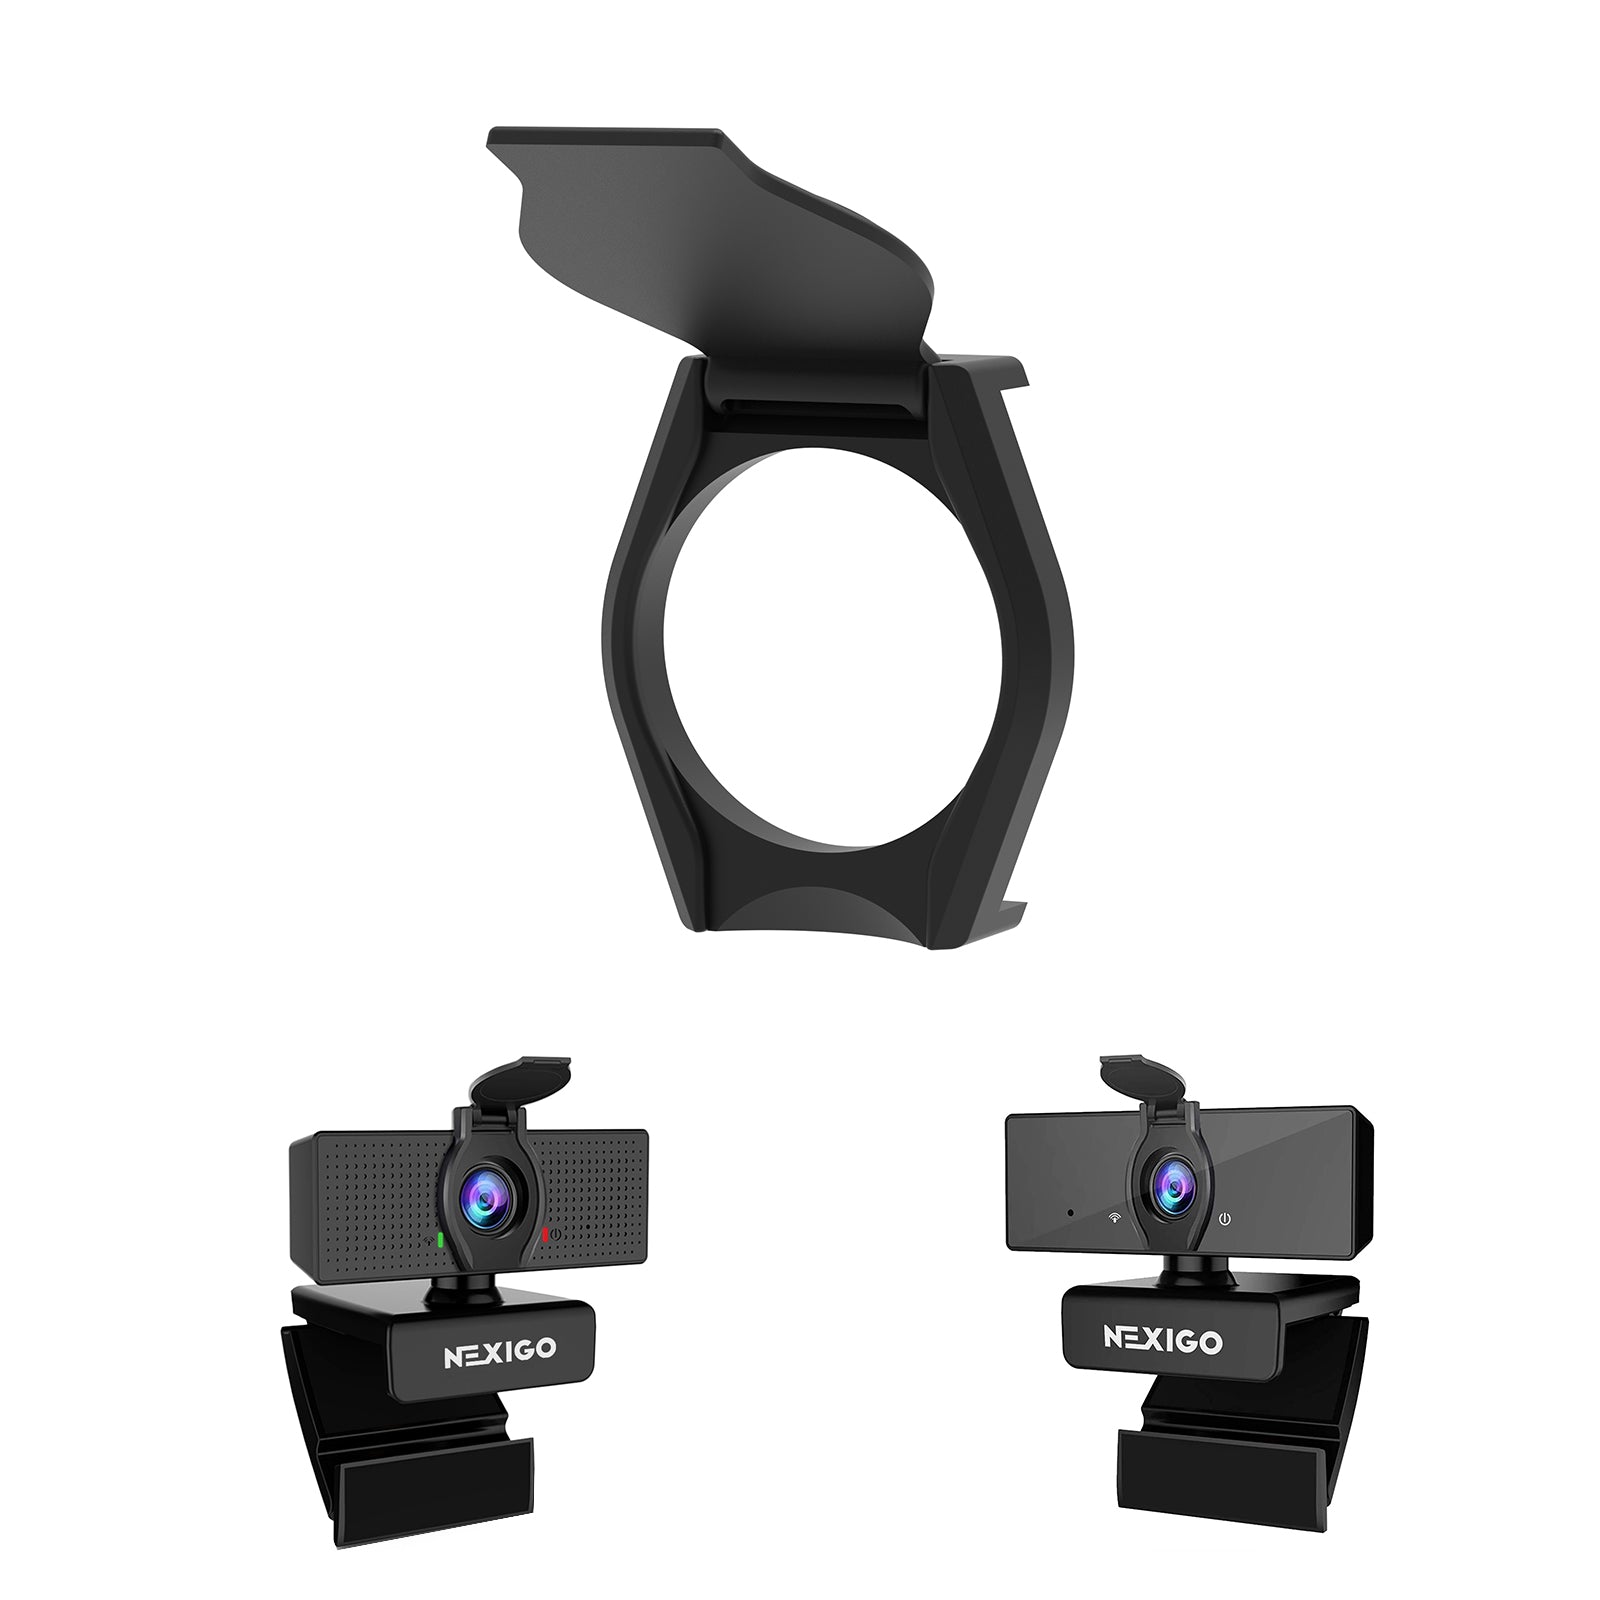 NexiGo Replacement Cover for Webcams consumerelectronics - NexiGo